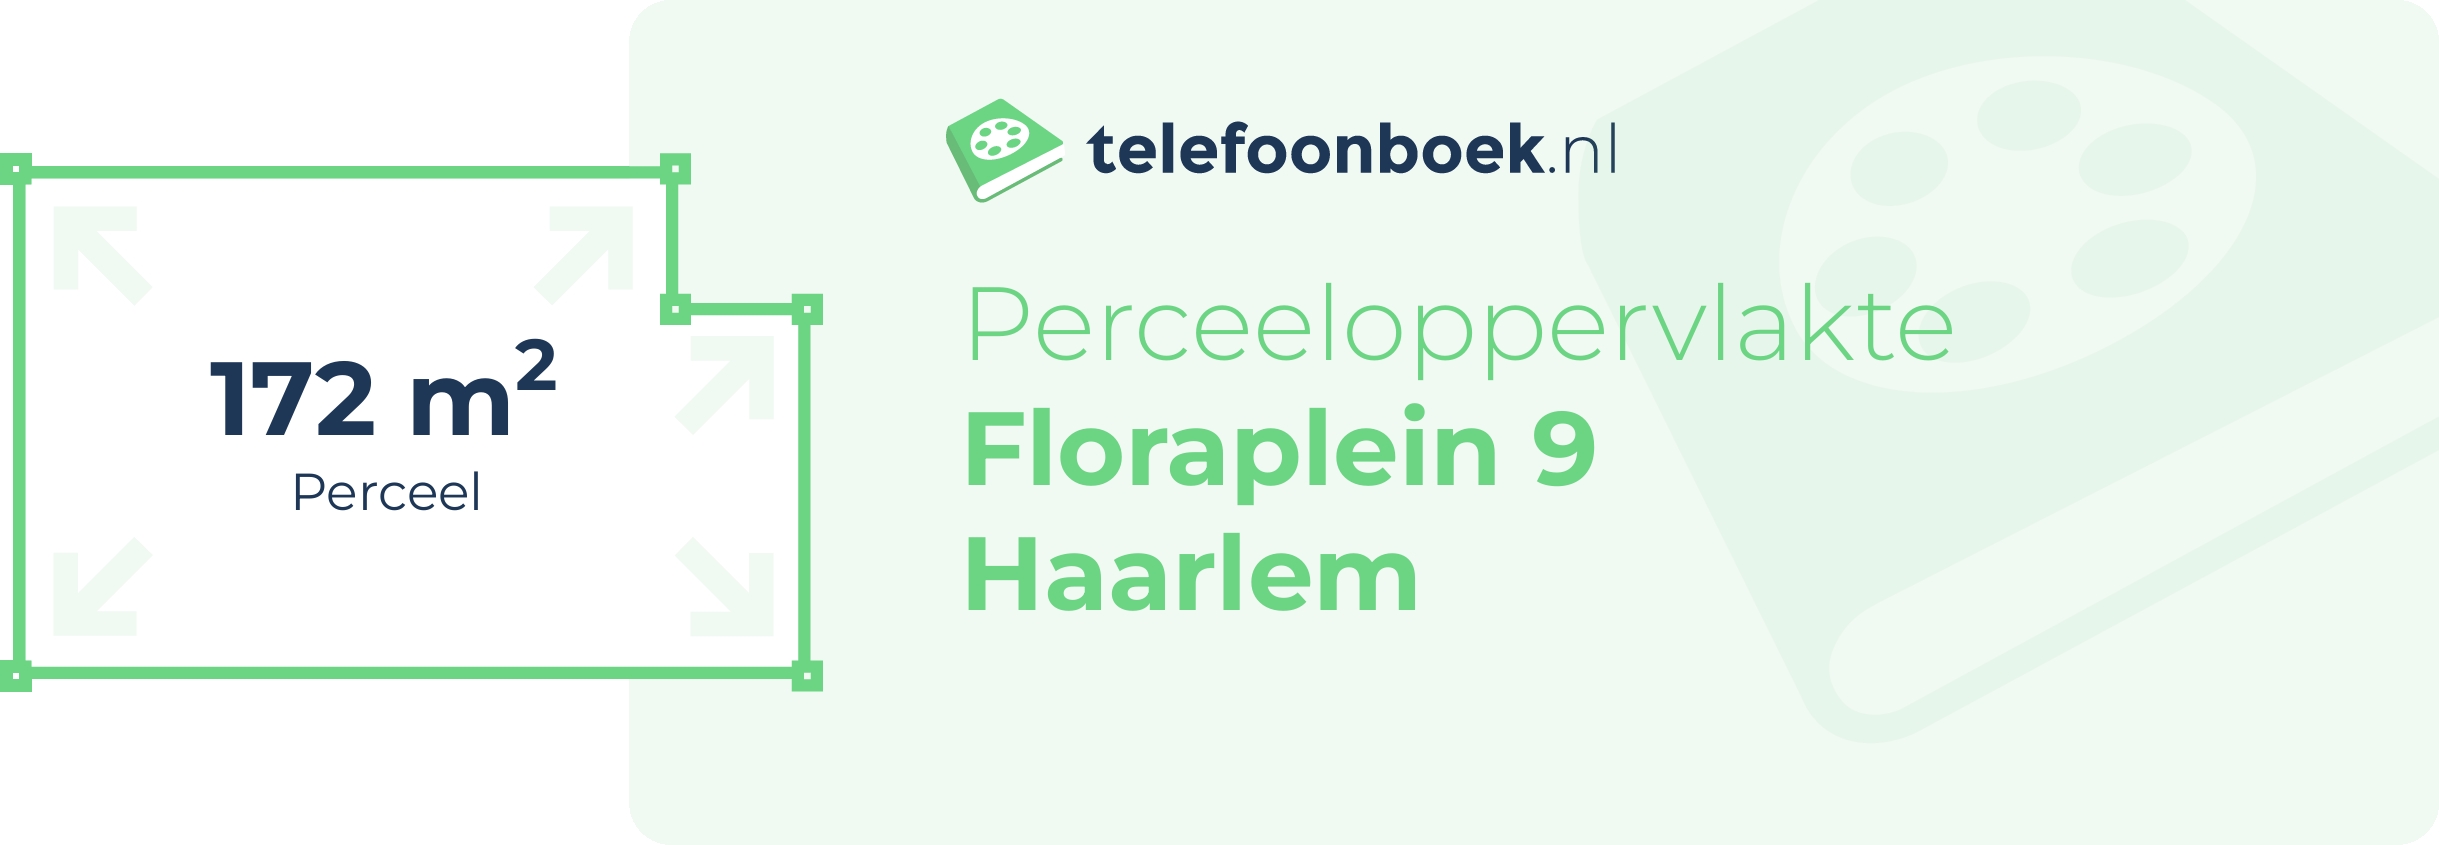 Perceeloppervlakte Floraplein 9 Haarlem